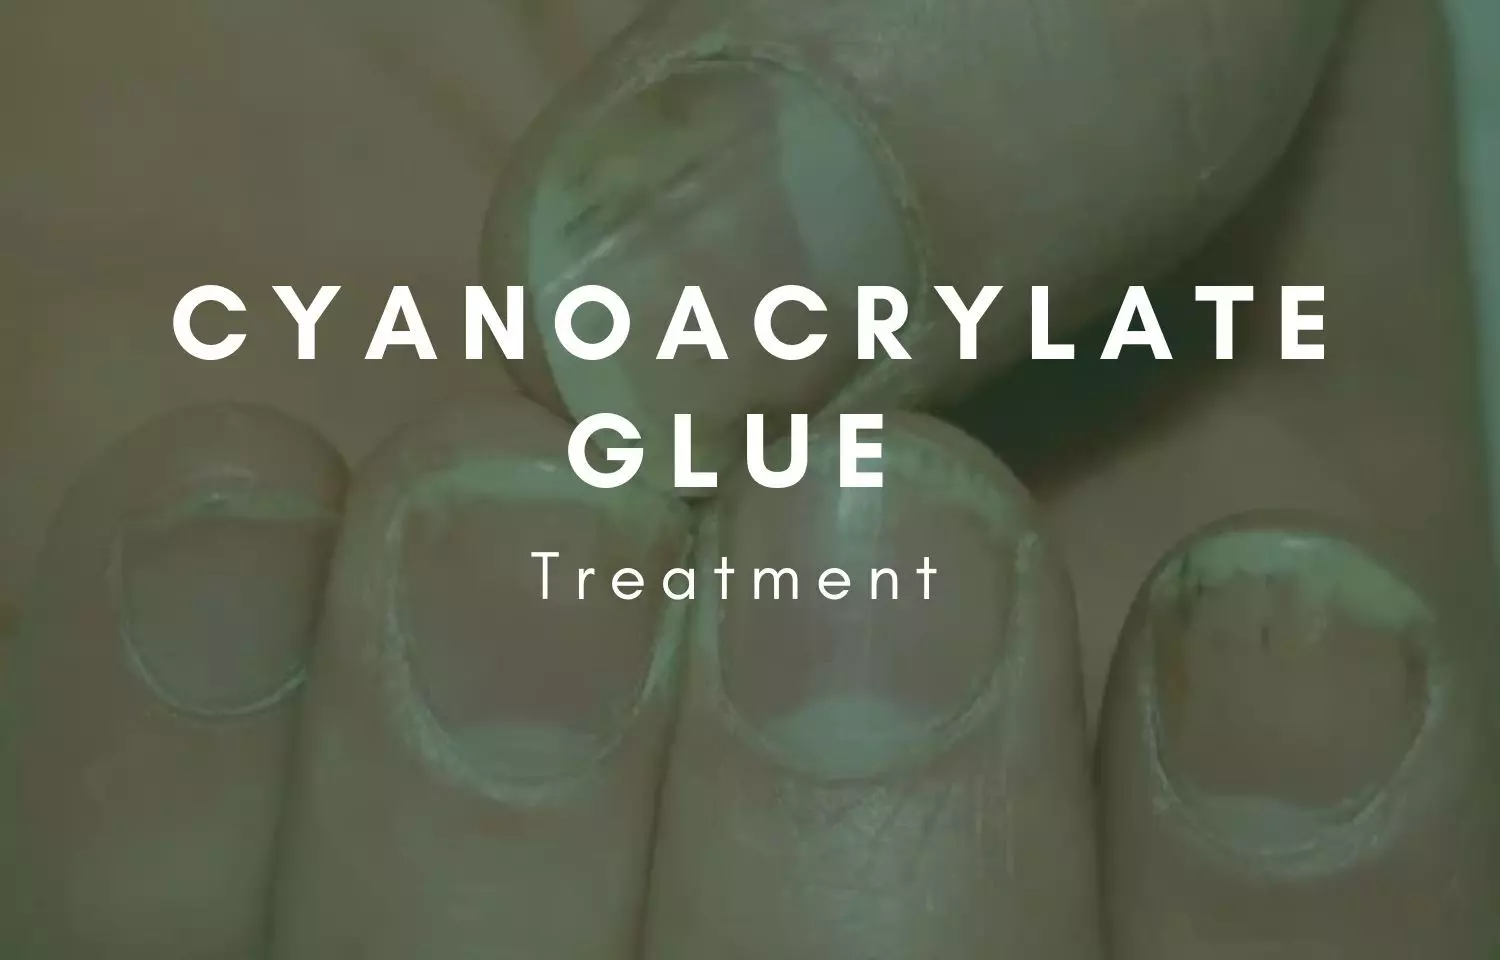 Cyanoacrylate glue - an innovative treatment for ingrown fingernail